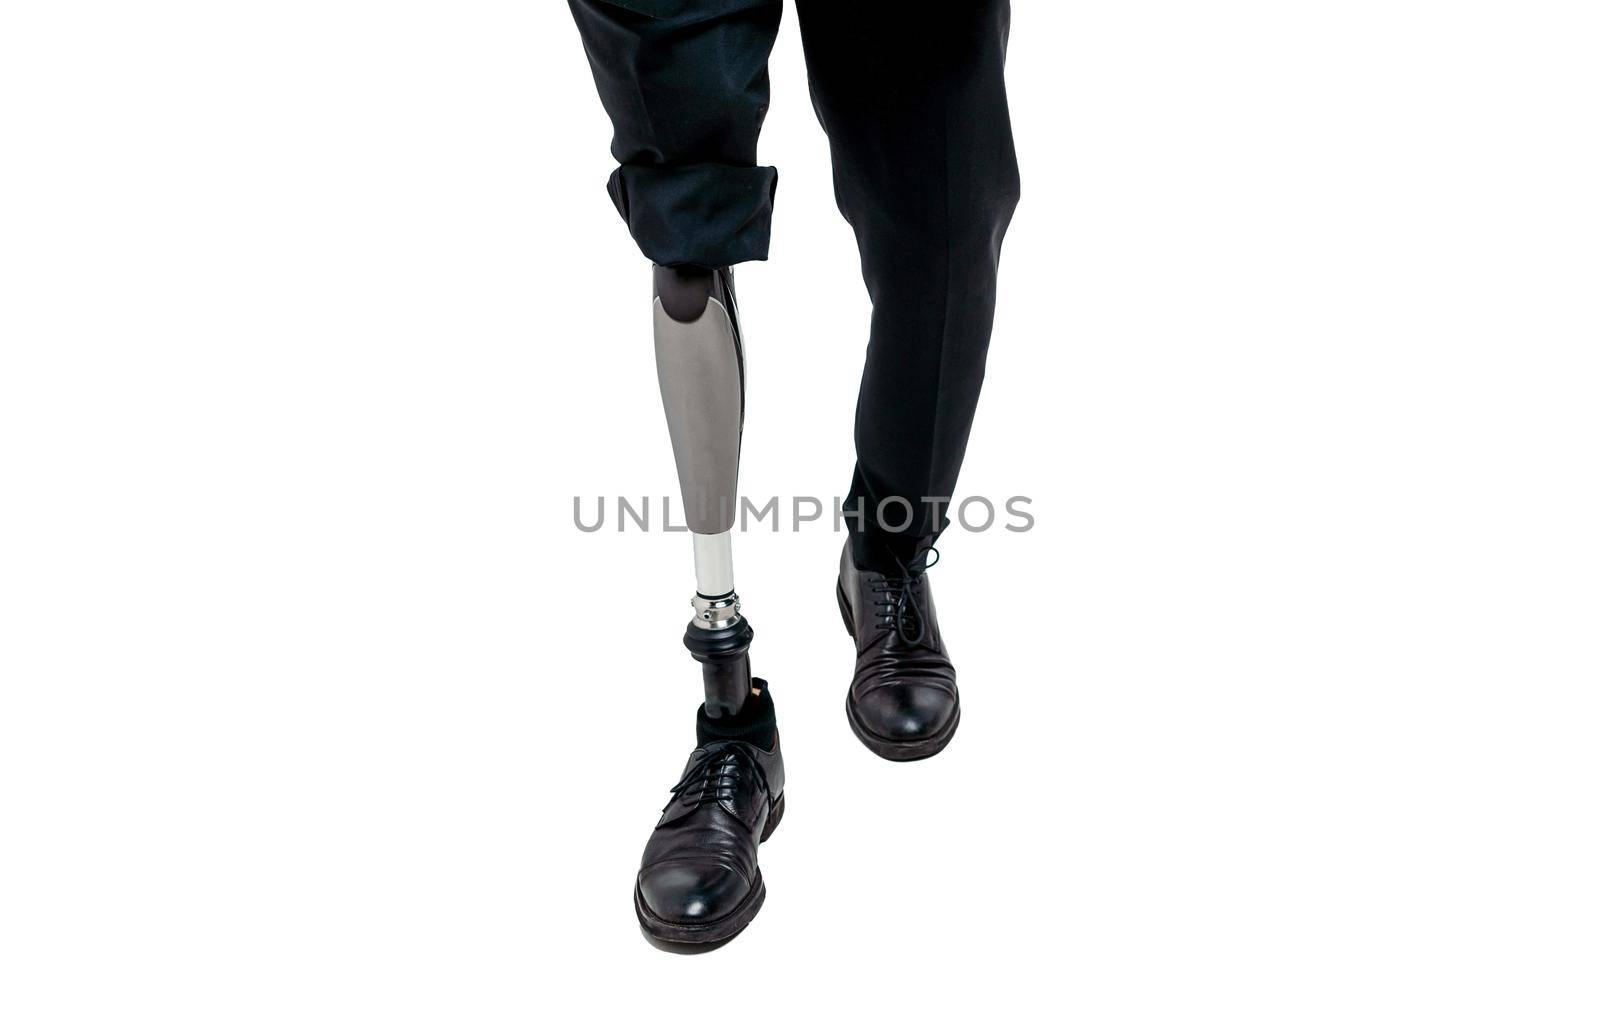 Disabled man with prosthetic leg, studio shoot